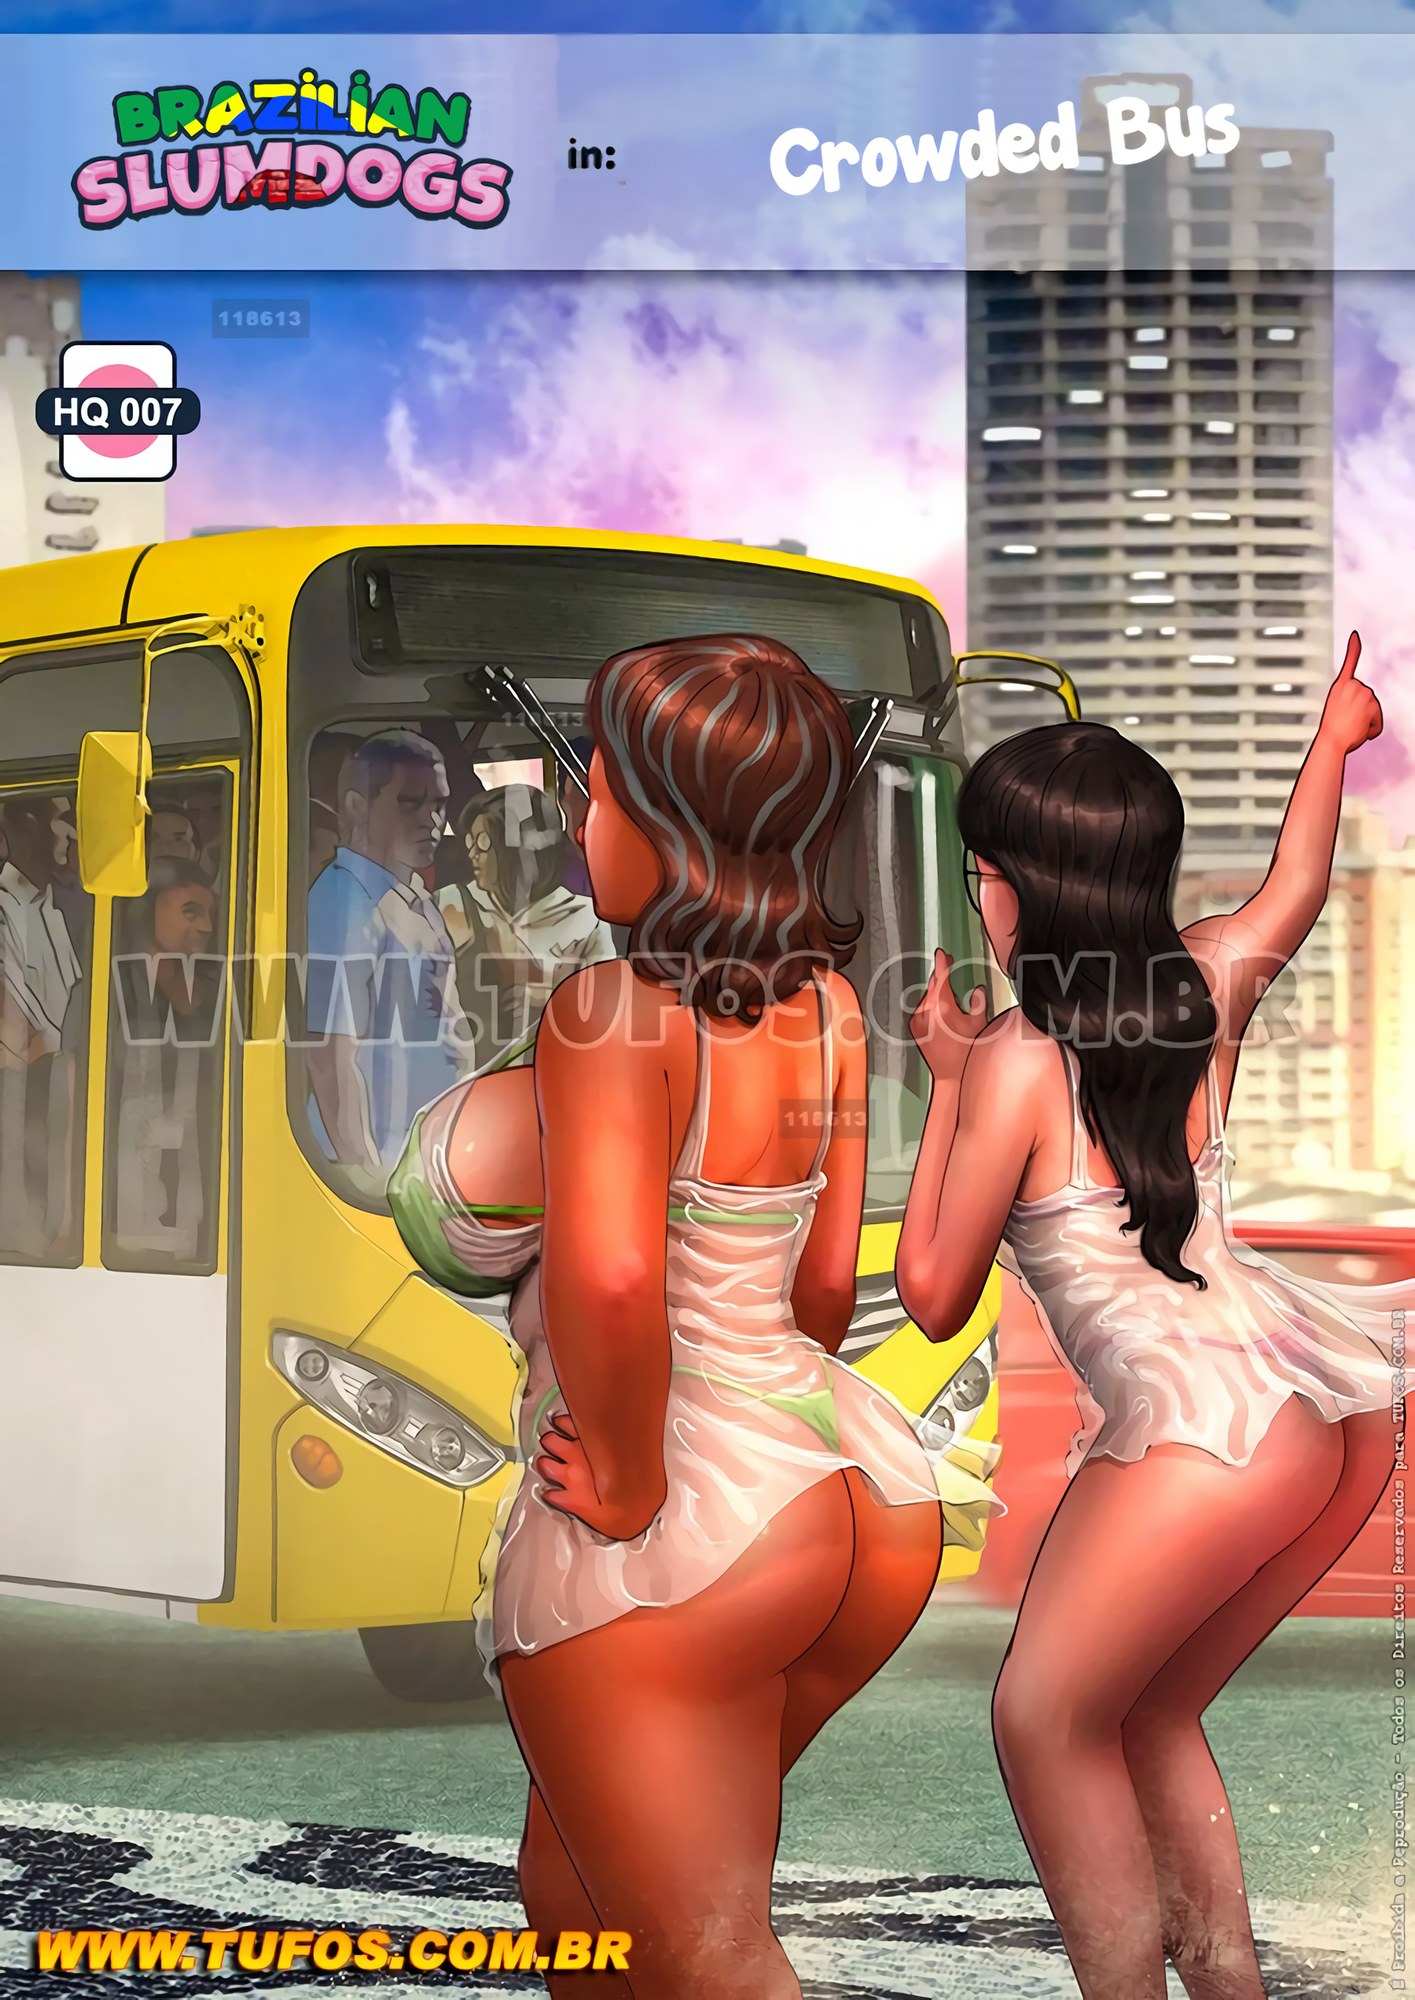 Crowded Bus Porn - Brazilian Slumdogs 7- Crowded Bus - Porn Cartoon Comics